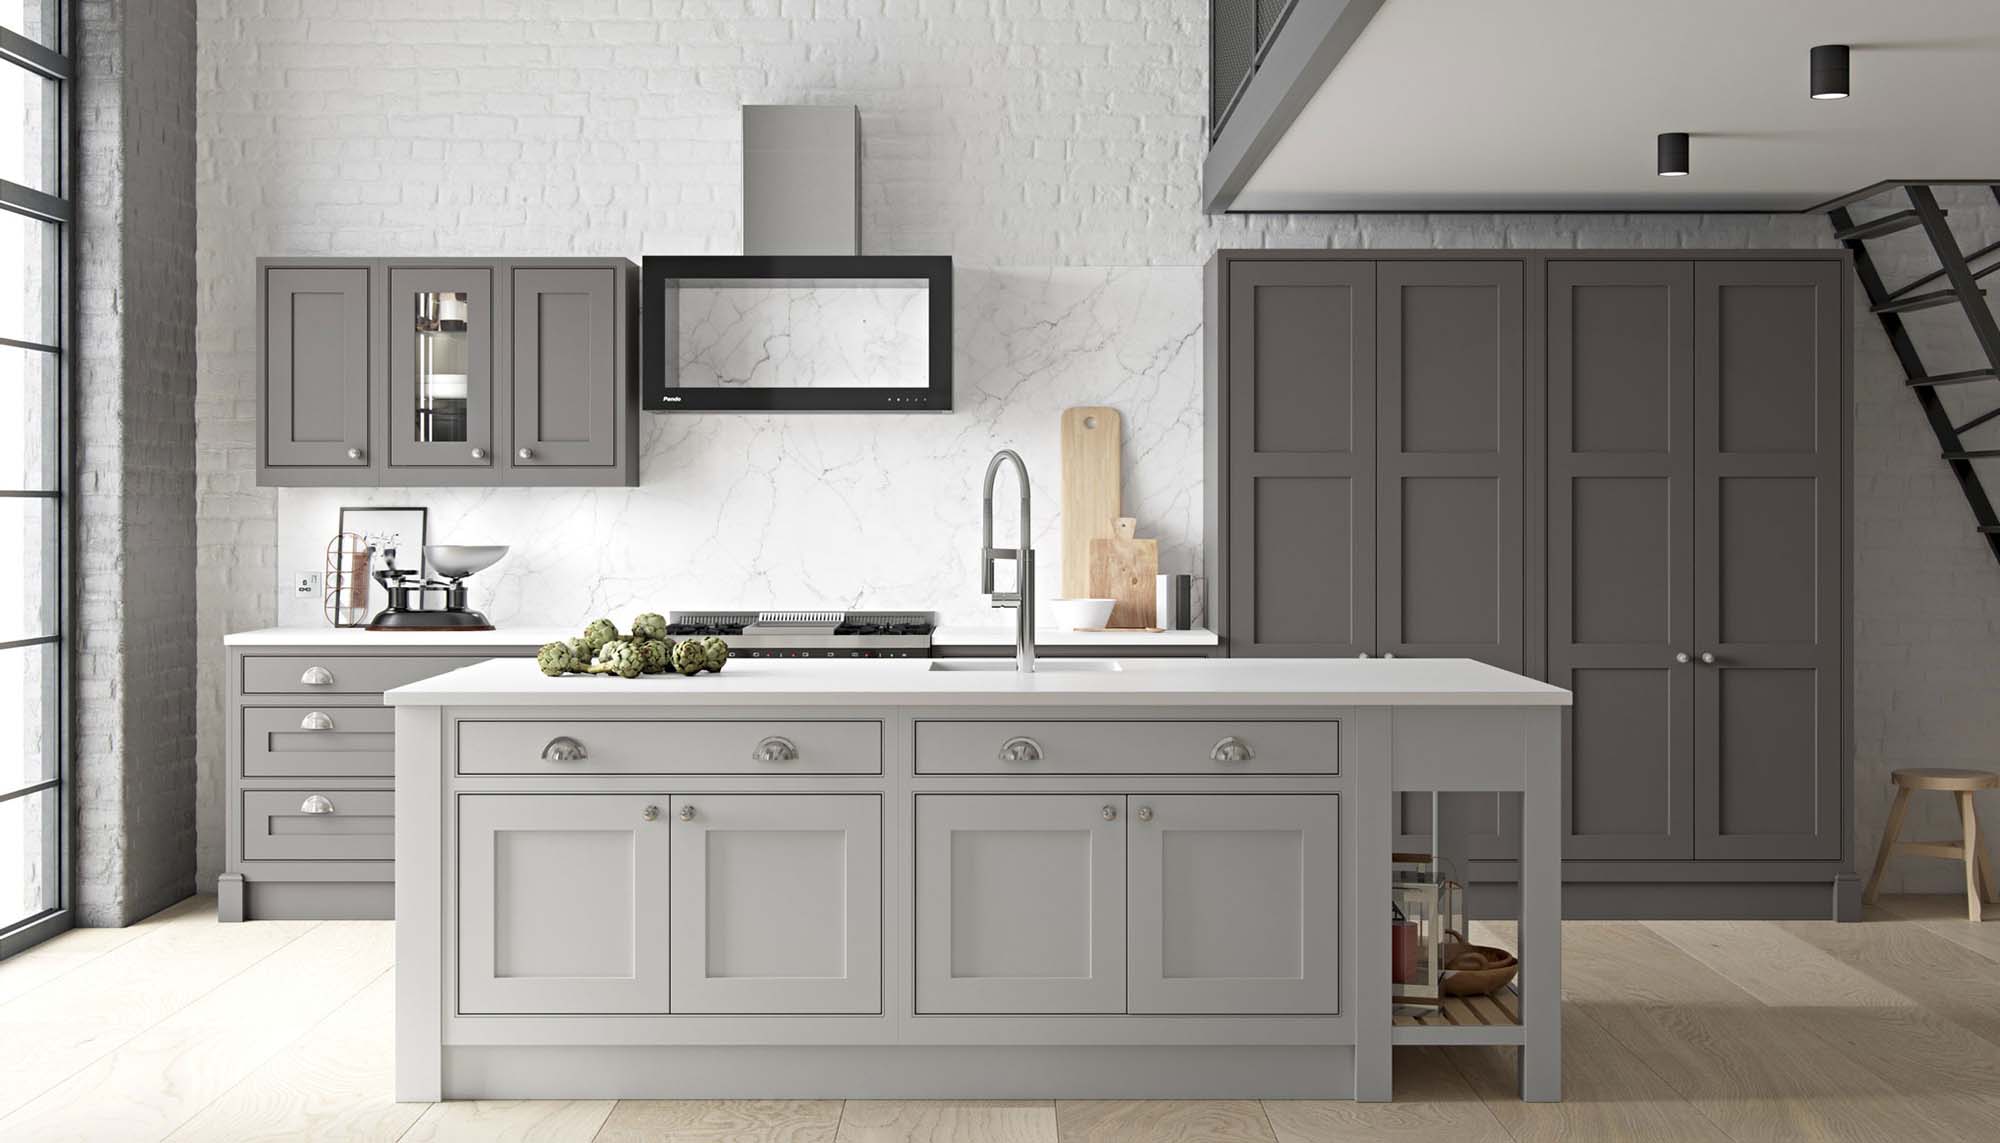 luxury kitchen design ideas | 2019 | kitchen pics | gambrick